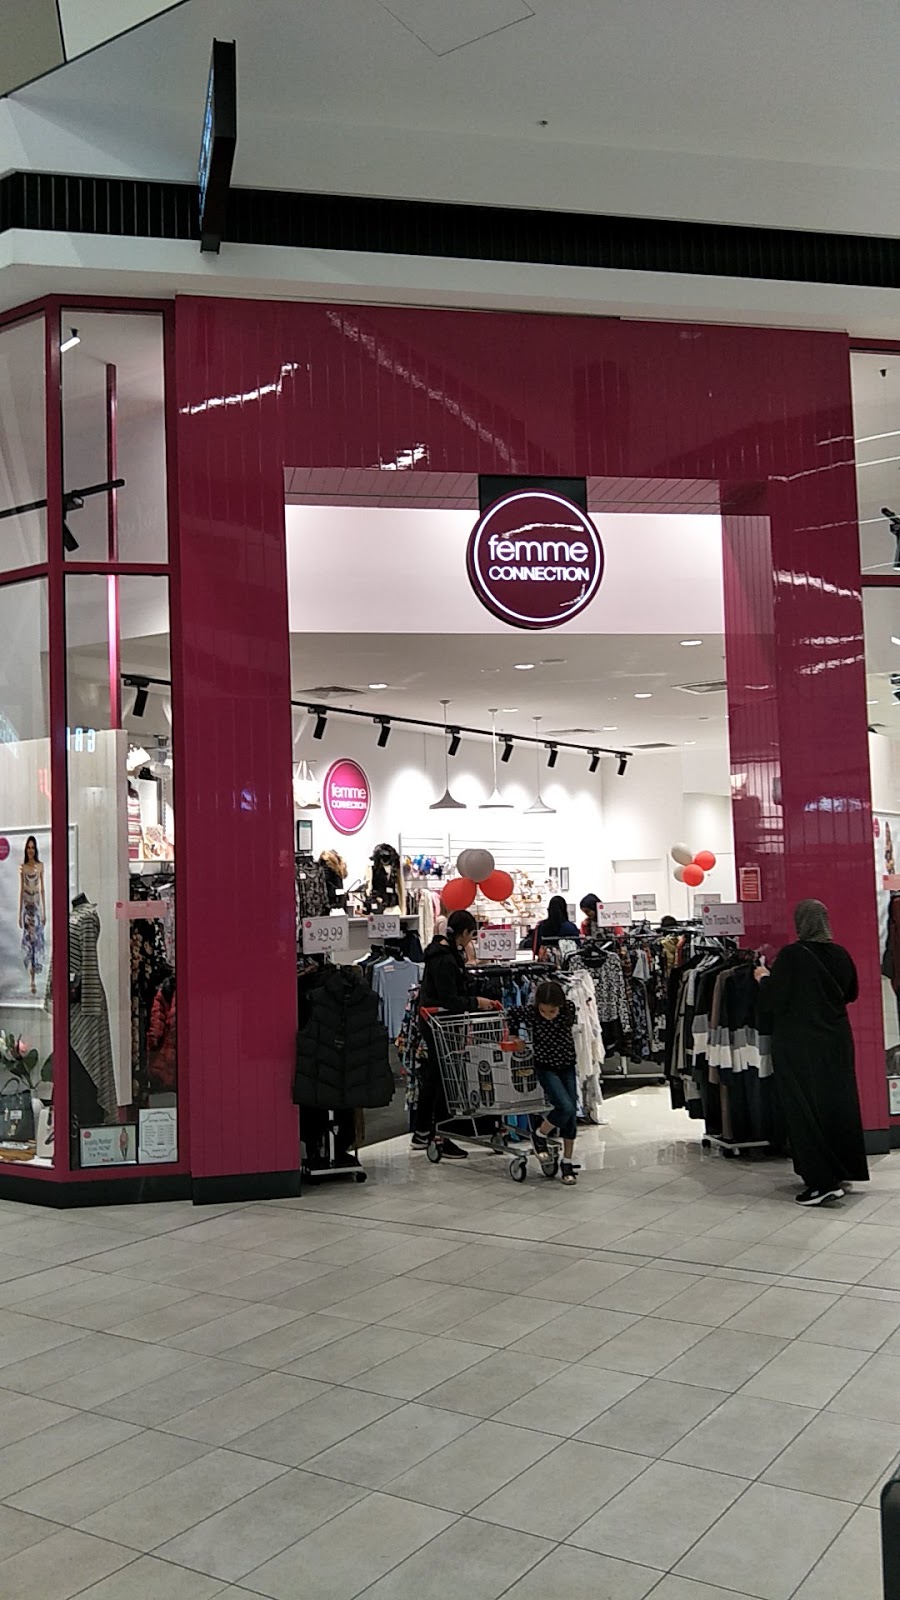 Femme Connection | clothing store | Shop 25, Tarneit, Central Shopping Centre, 540 Derrimut Rd, Tarneit VIC 3029, Australia | 0387548830 OR +61 3 8754 8830